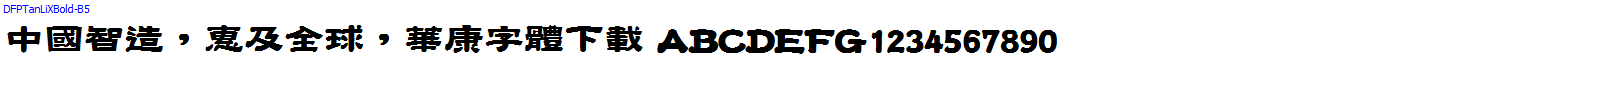 華康字體DFPTanLiXBold-B5.TTF